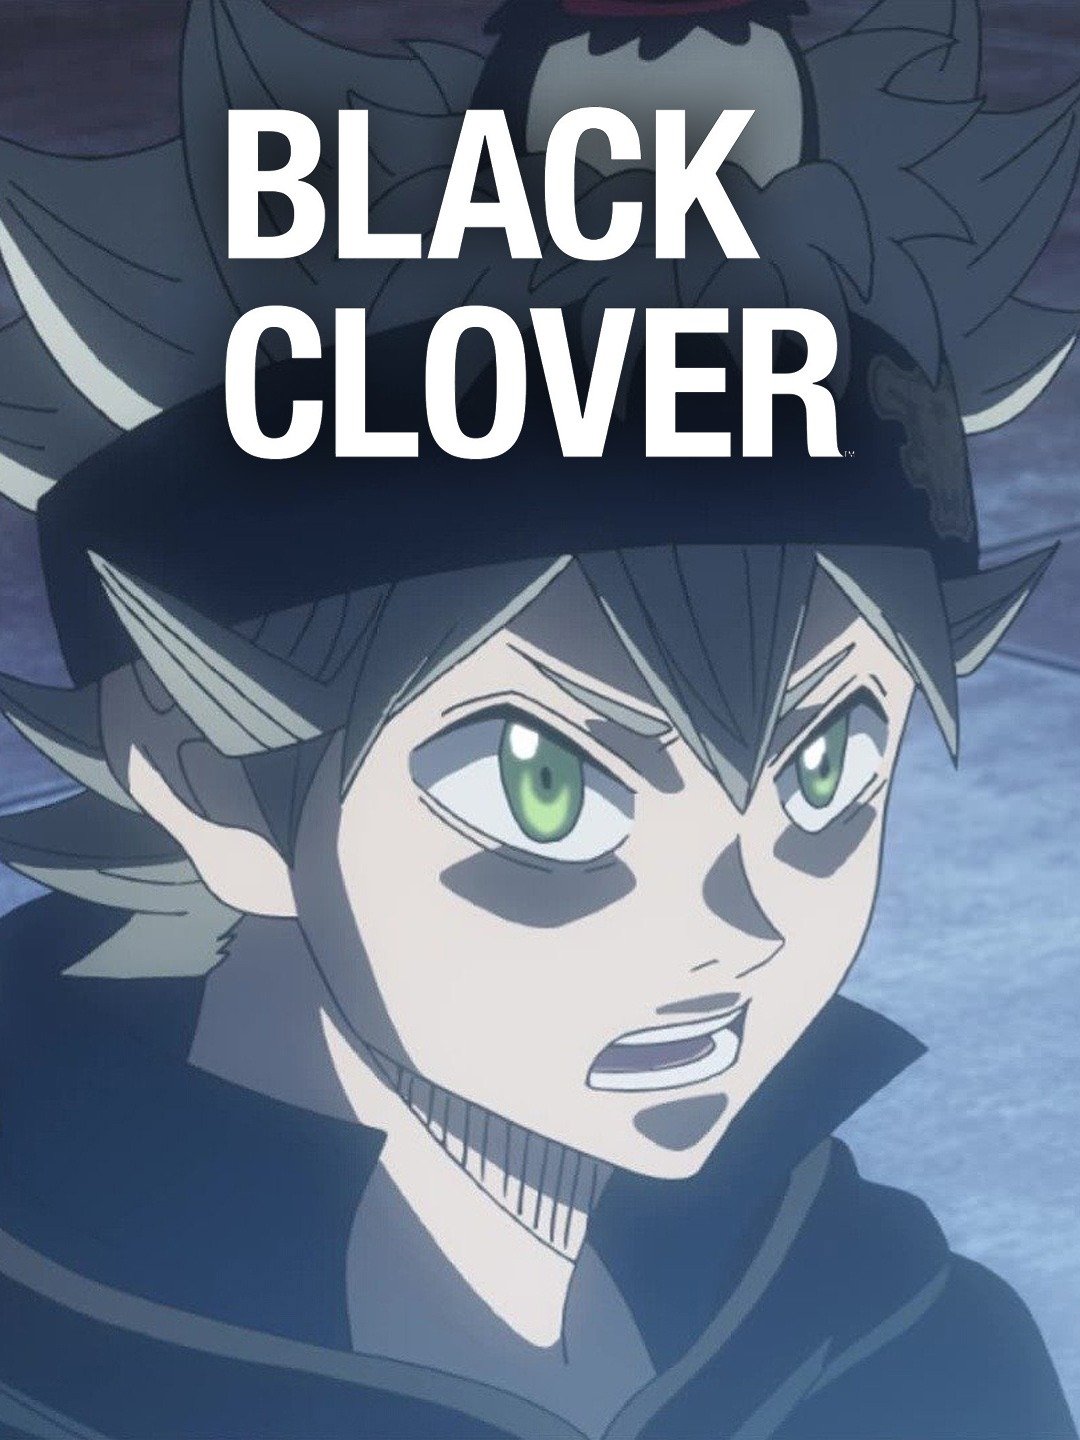 Black clover devil, 5 leaf clover, anime, asta, black bulls, black